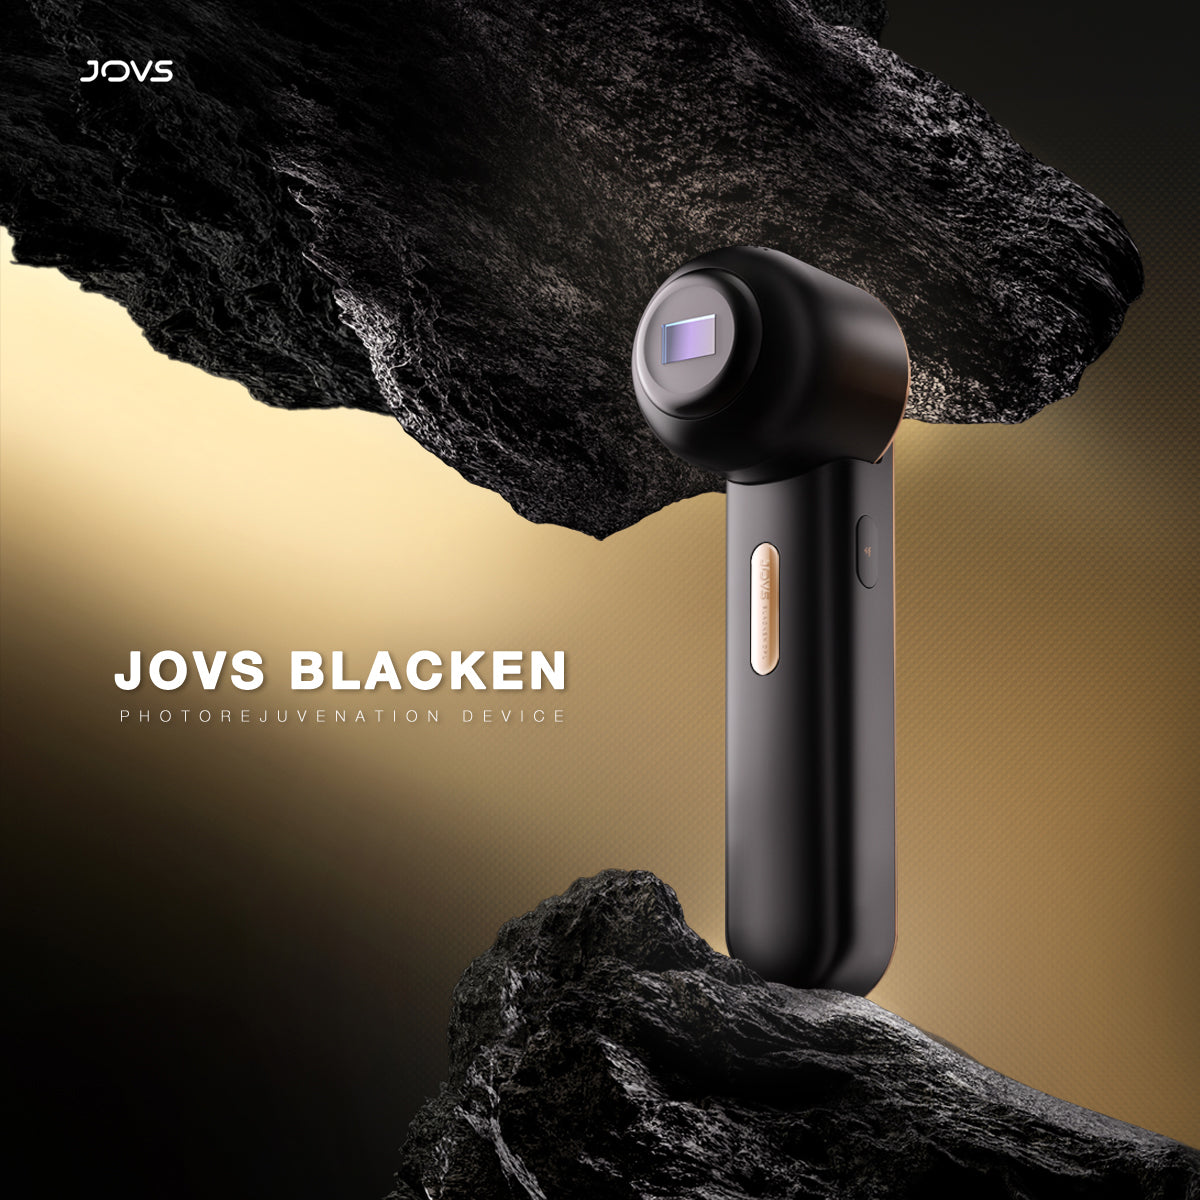 JOVS Blacken DPL Photofacial skincare device on display, highlighting its sleek design and cutting-edge skincare technology.